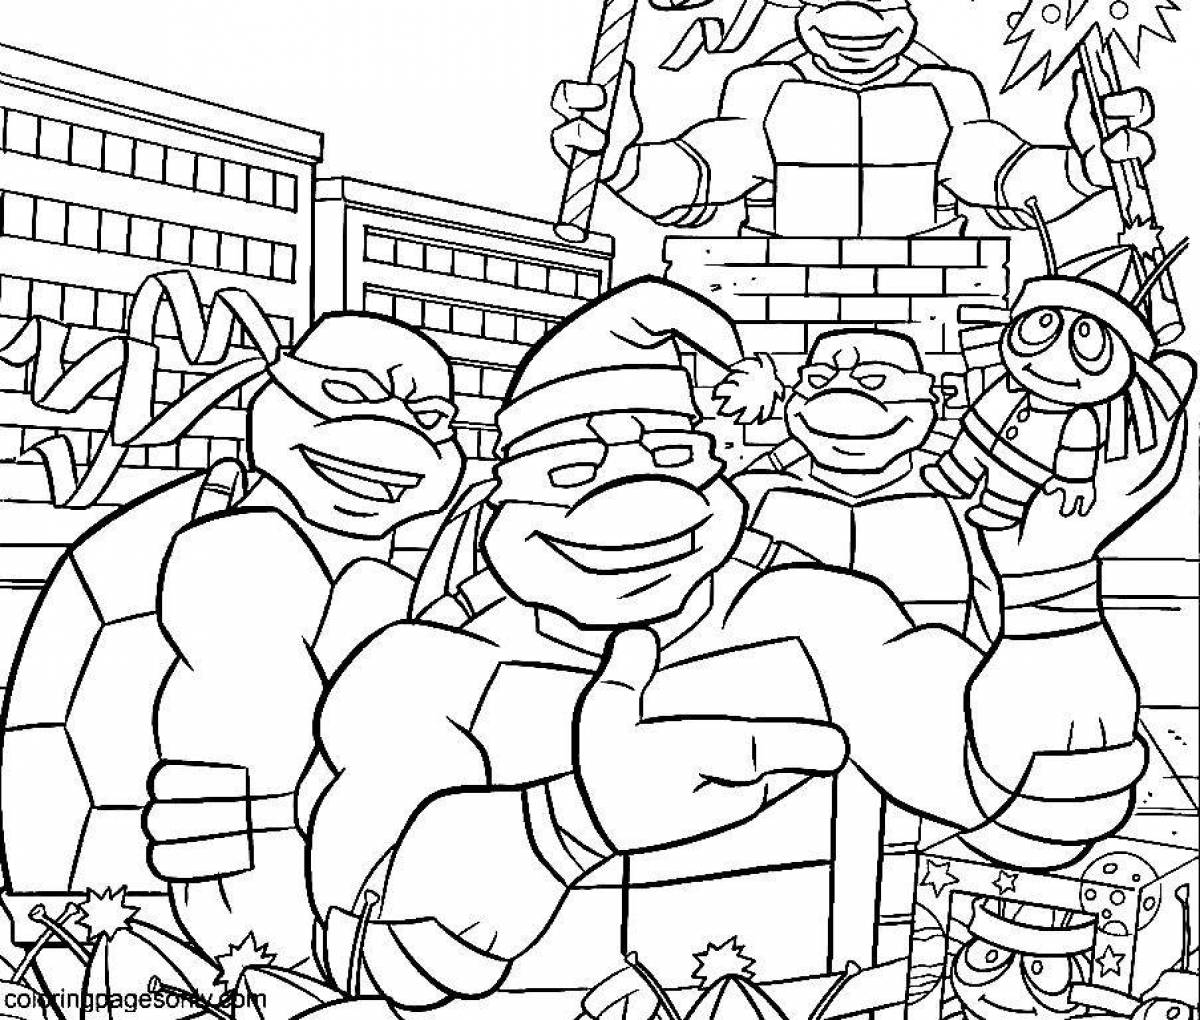 Teenage Mutant Ninja Turtle coloring book